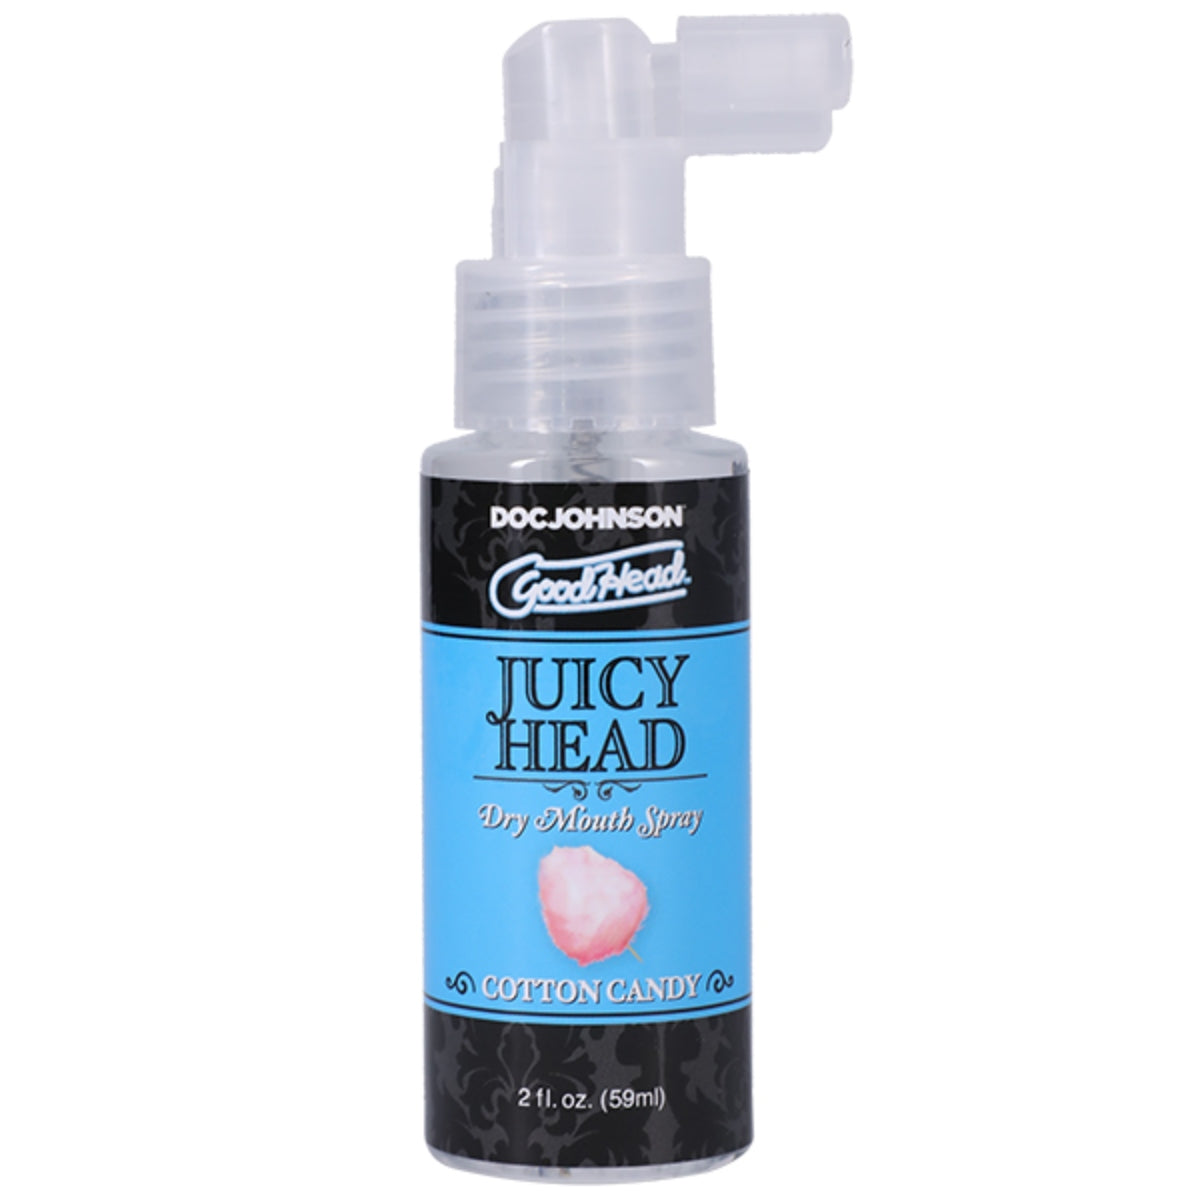 GoodHead Juicy Head Dry Mouth Spray Cotton Candy 2oz